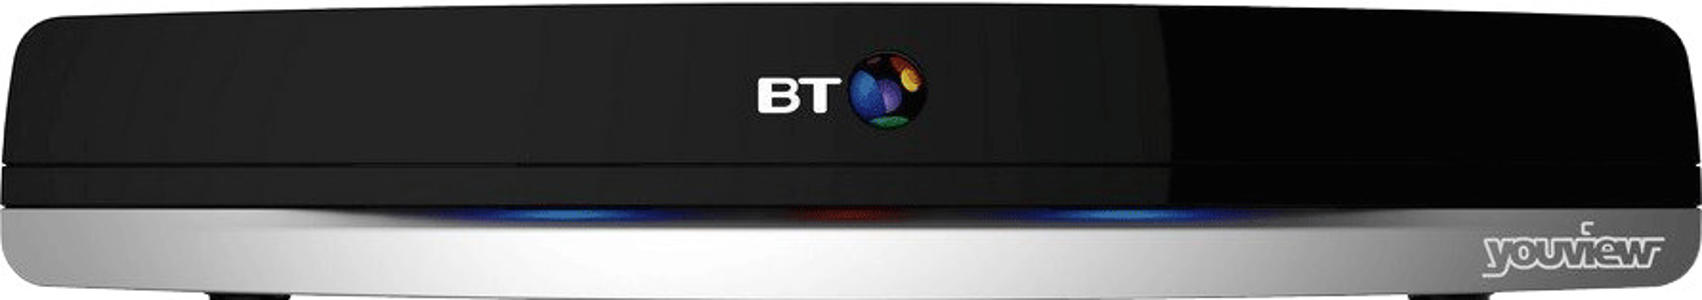 BT YouView Smart HD Digital TV Recorder 500GB